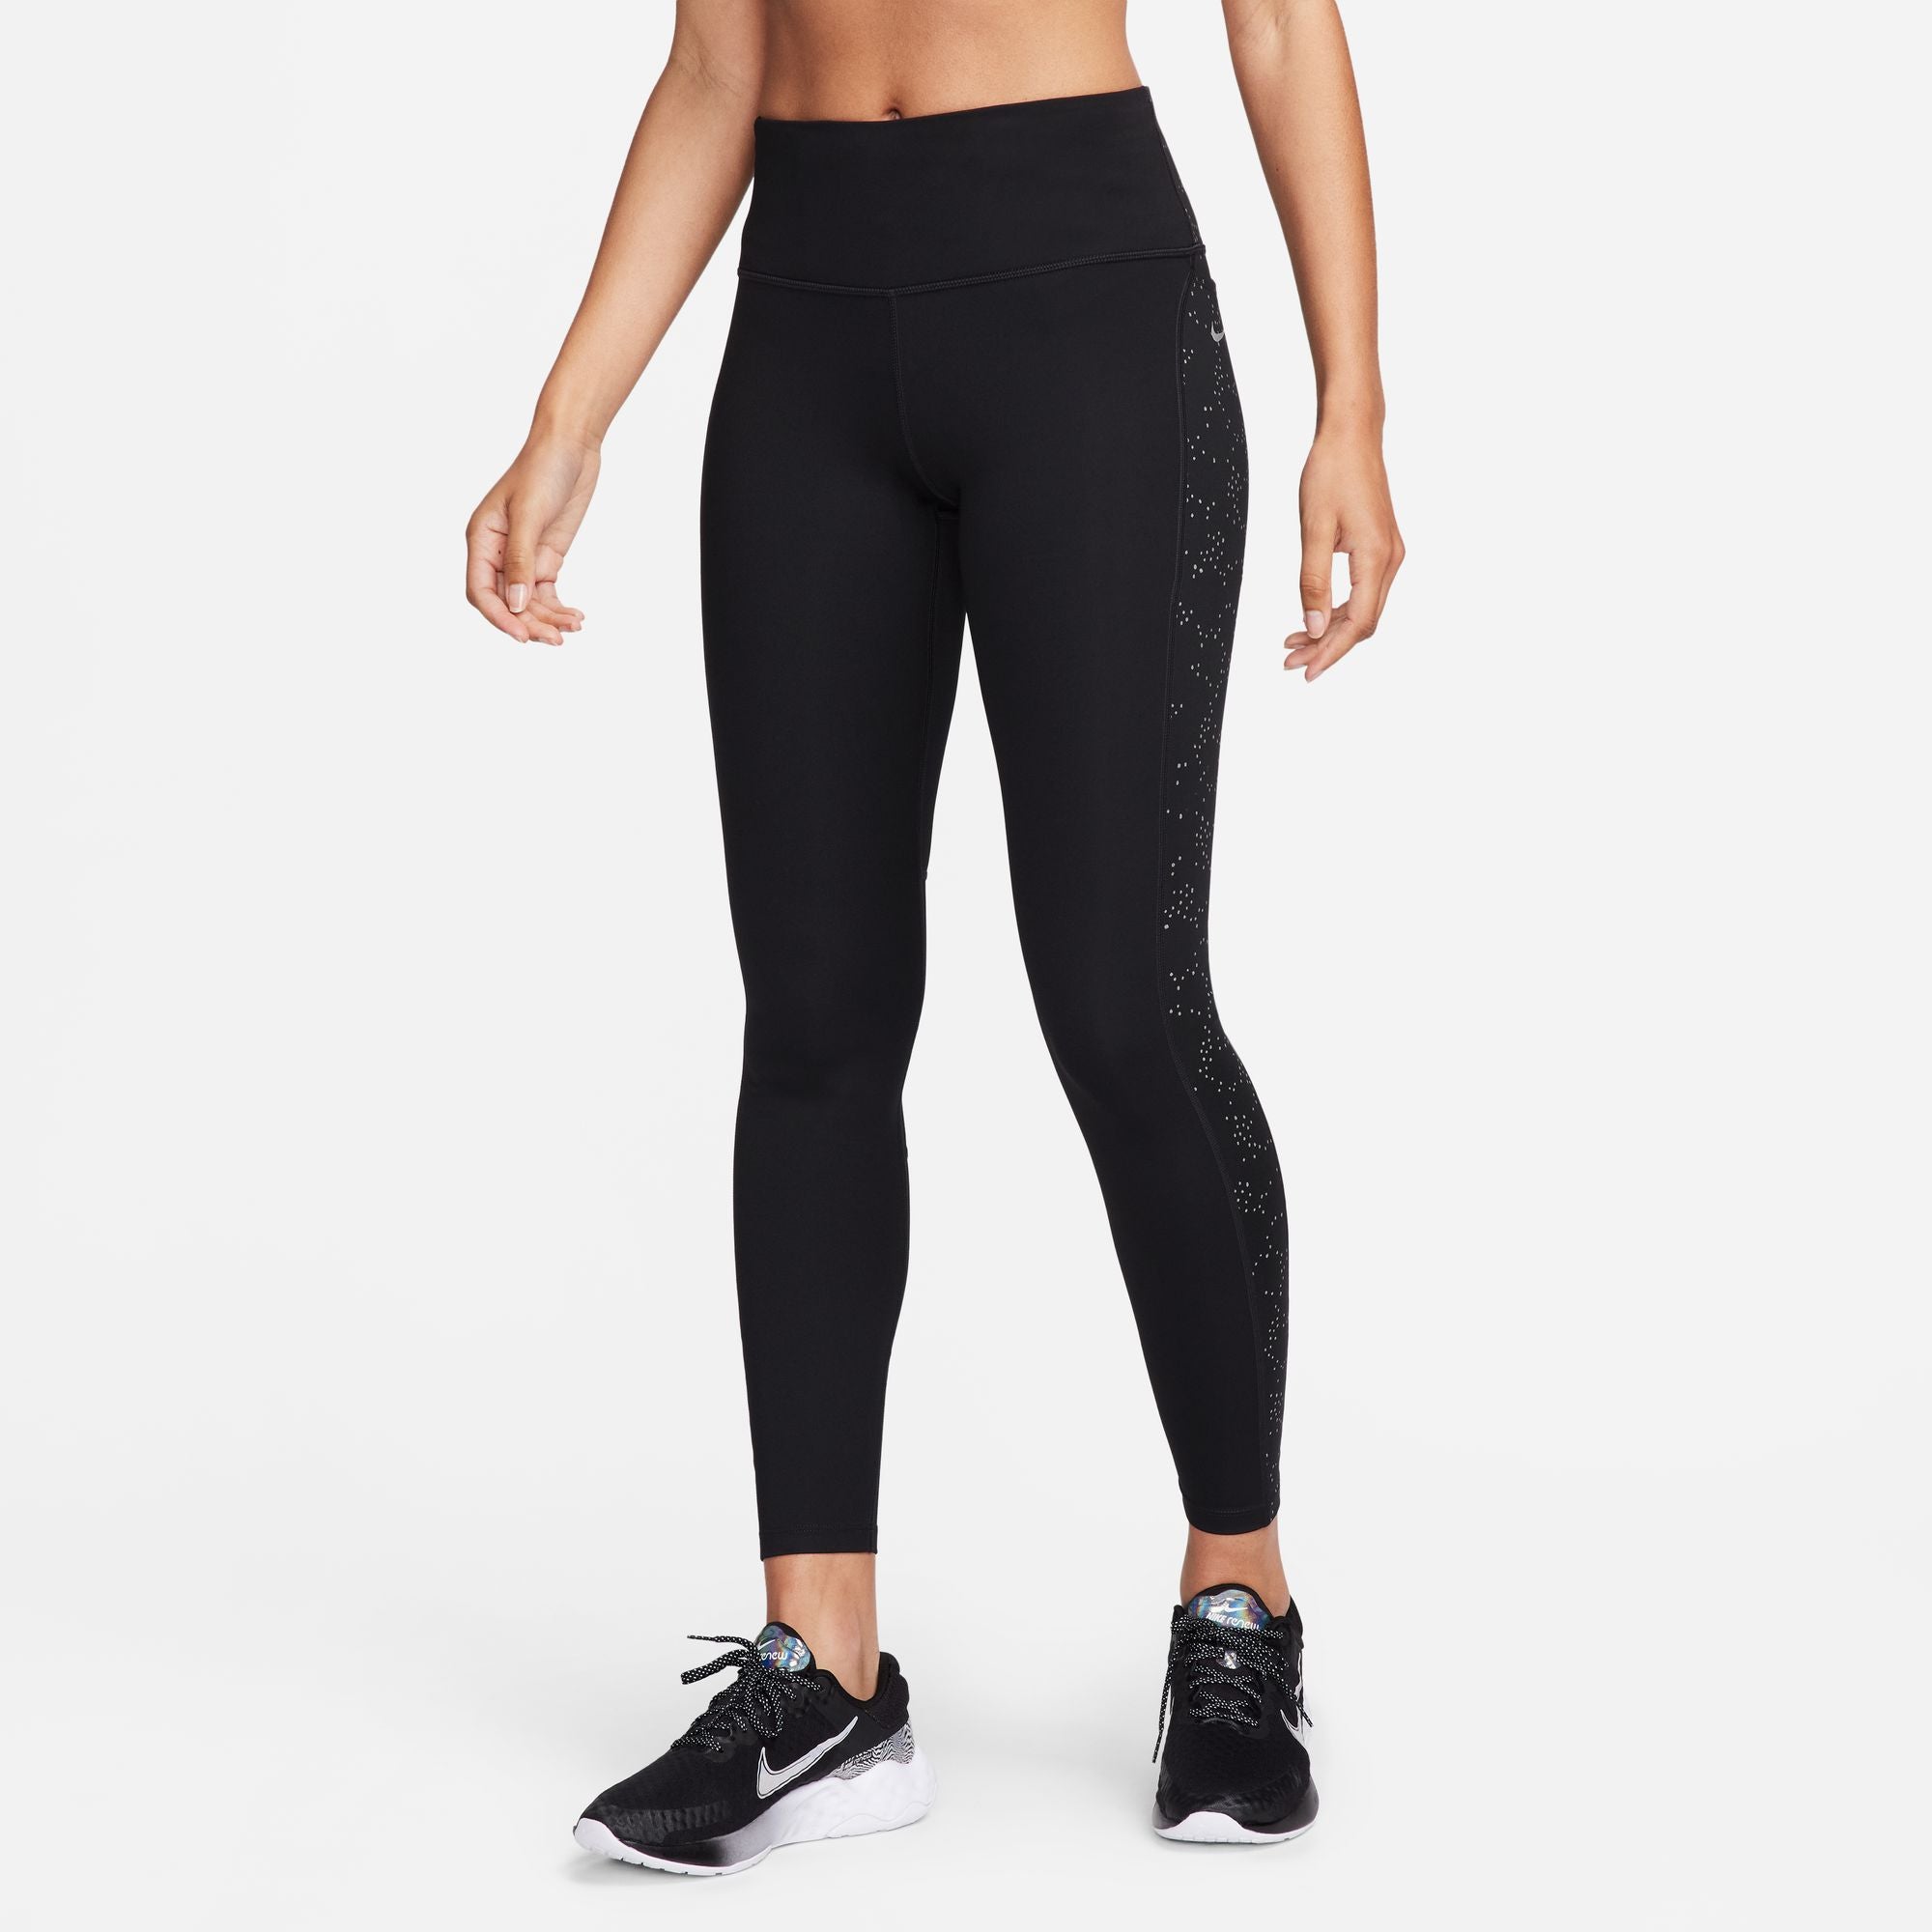 Nike DRI-FIT 547605-010 Women's Thermal Running Tights Black Small